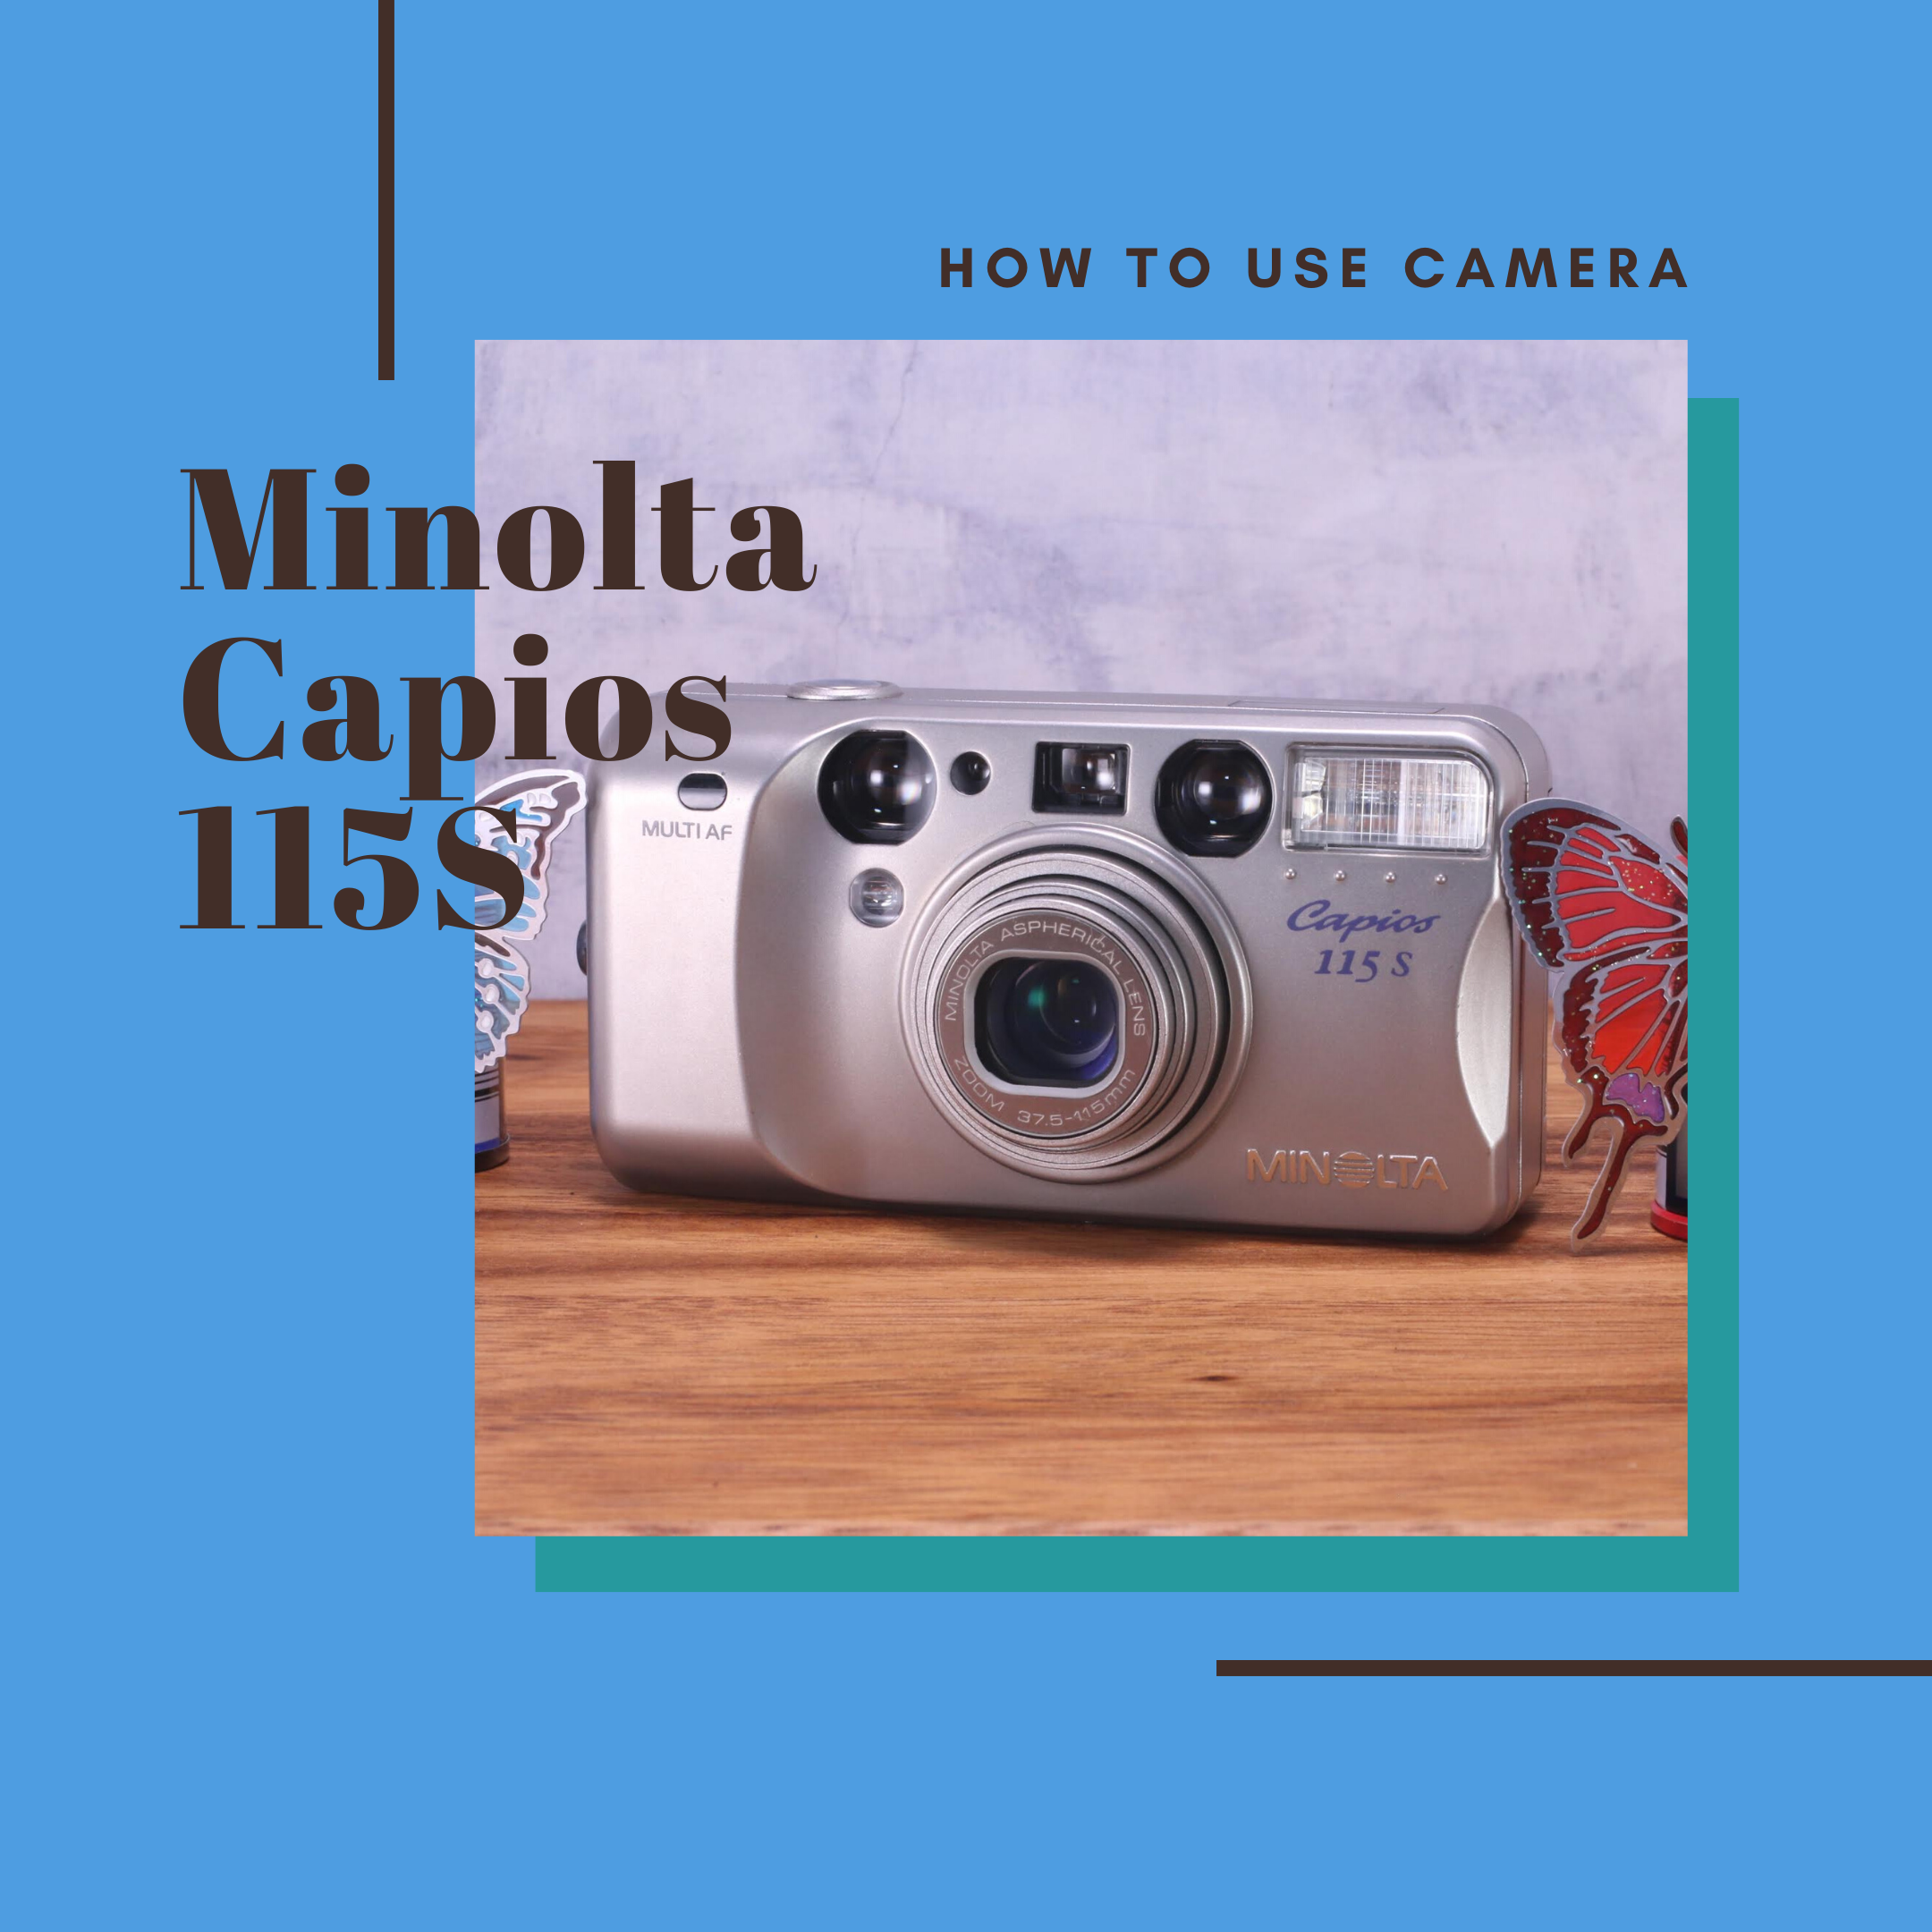 capios 115 s　MINOLTA　ミノルタ　フィルムカメラ